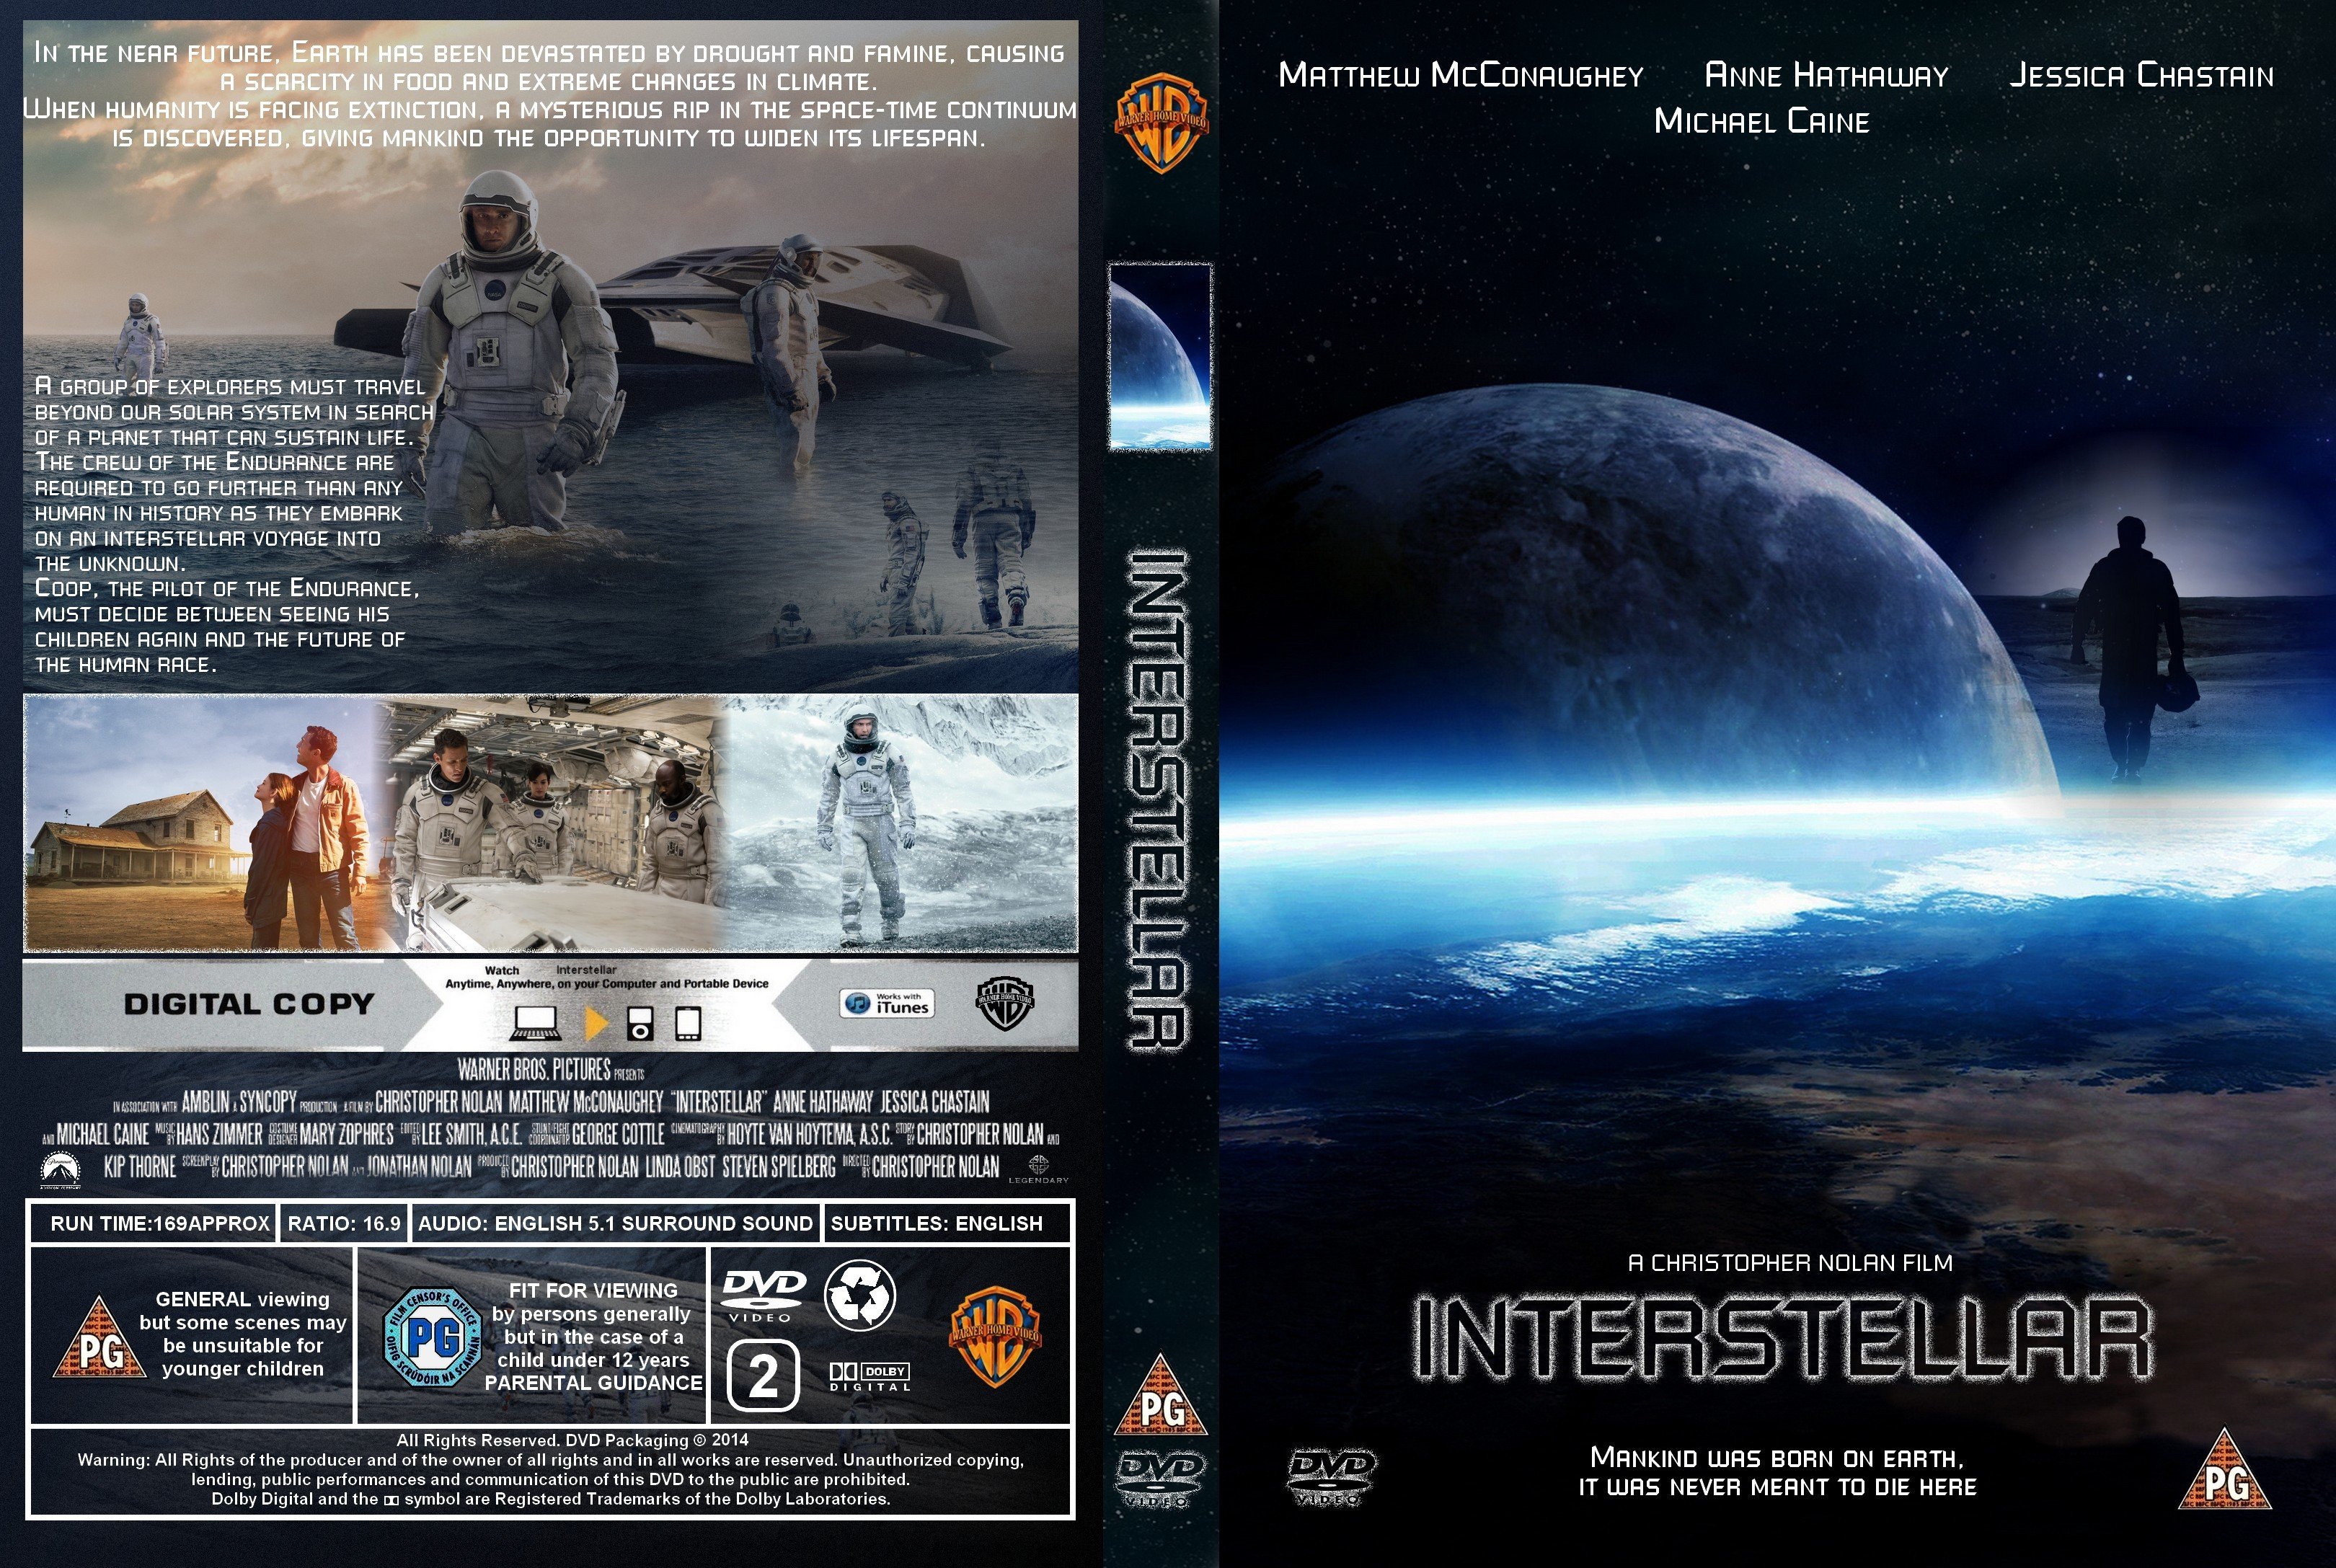 interstellar, Sci fi, Adventure, Mystery, Astronaut, Space, Futurictic, Spaceship, Poster Wallpaper